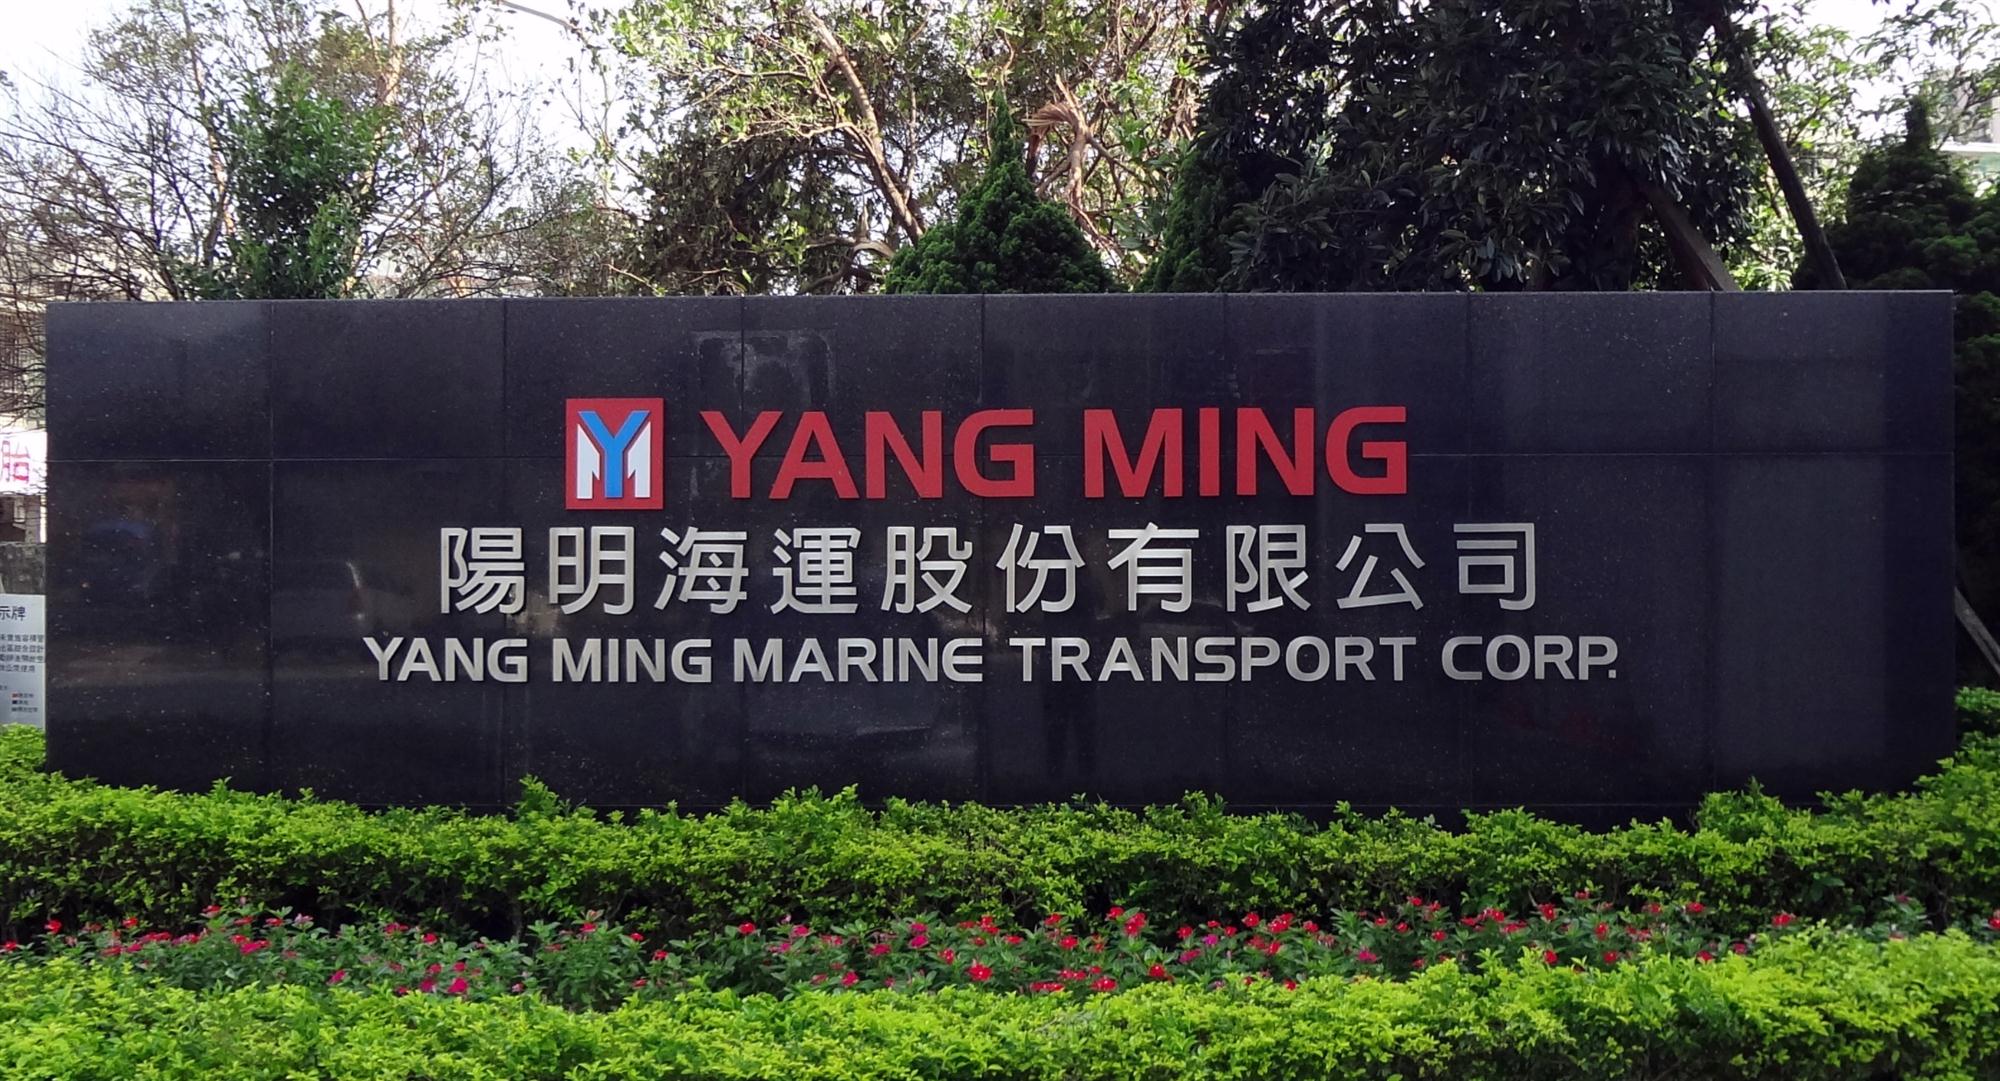 Self Photos / Files - Yang Ming Marine headquarters sign